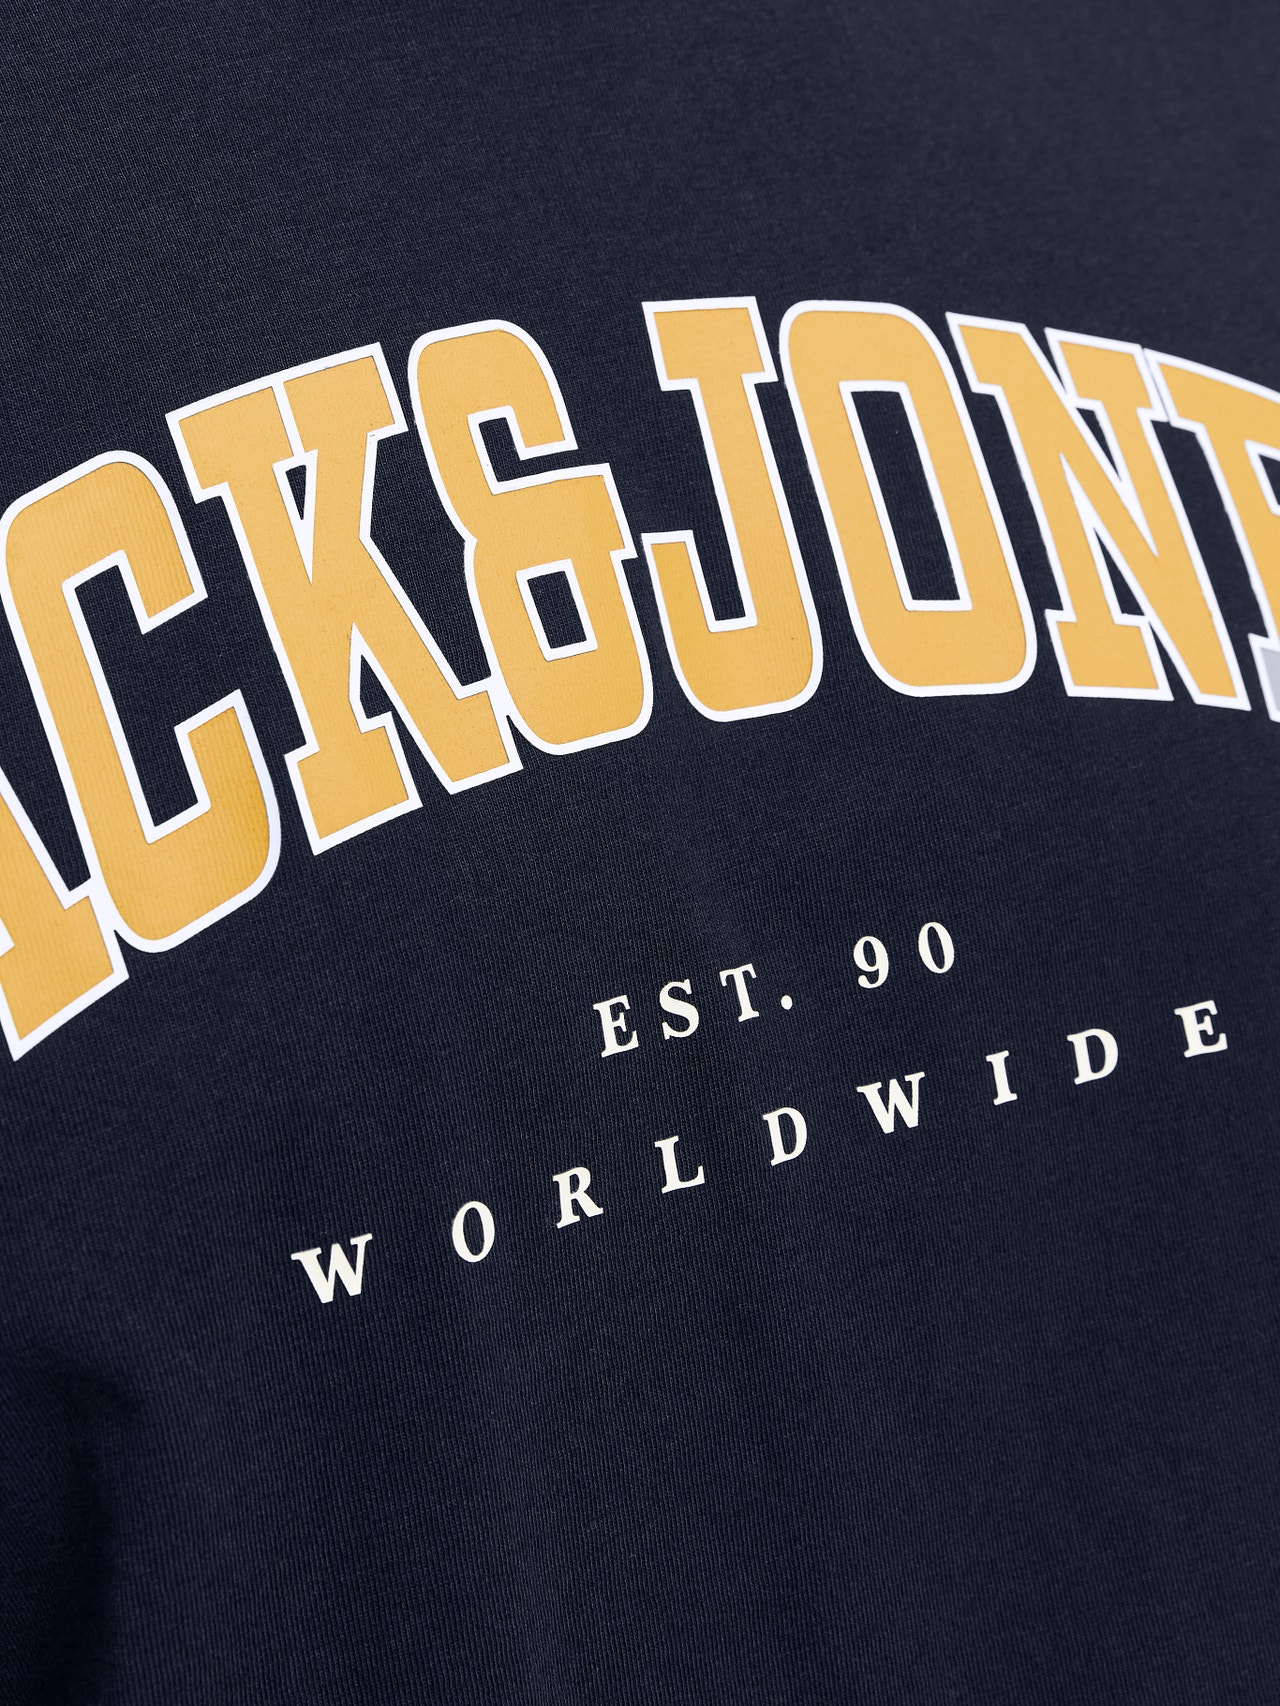 Jack & Jones Camiseta Logotipo Cuello redondo -Navy Blazer - 12257579